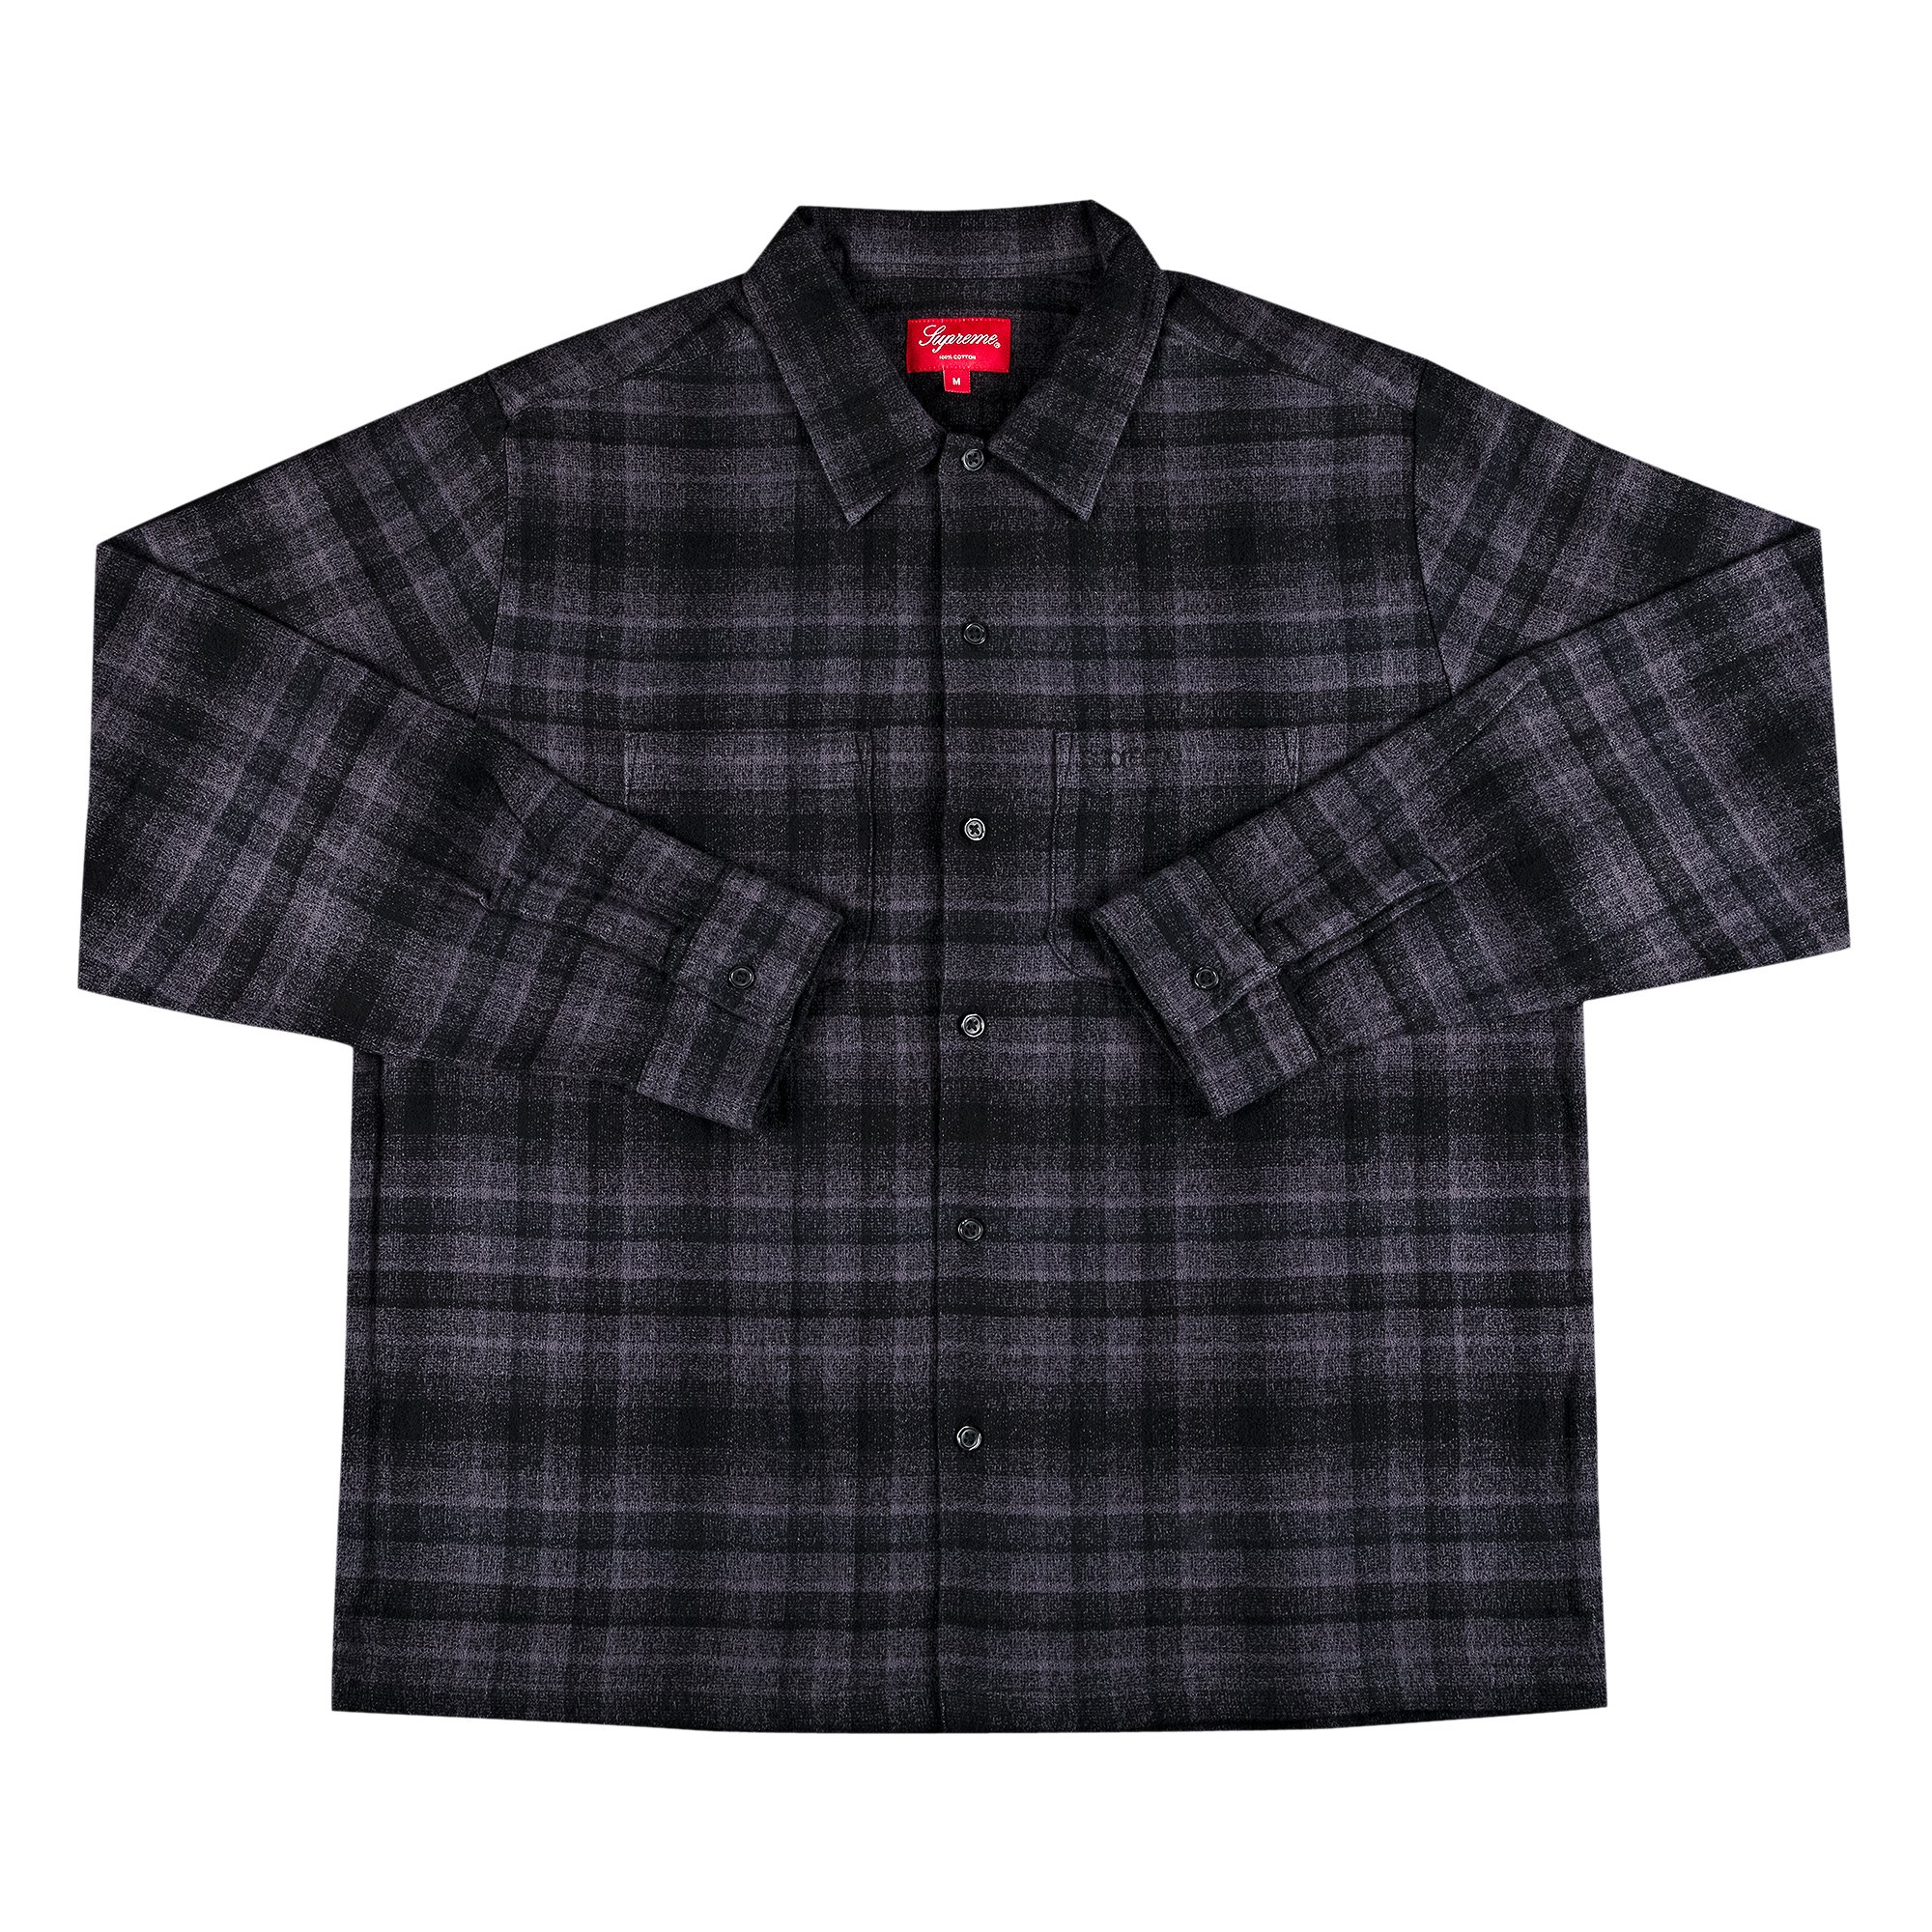 Buy Supreme Plaid Flannel Shirt 'Black' - SS21S39 BLACK | GOAT